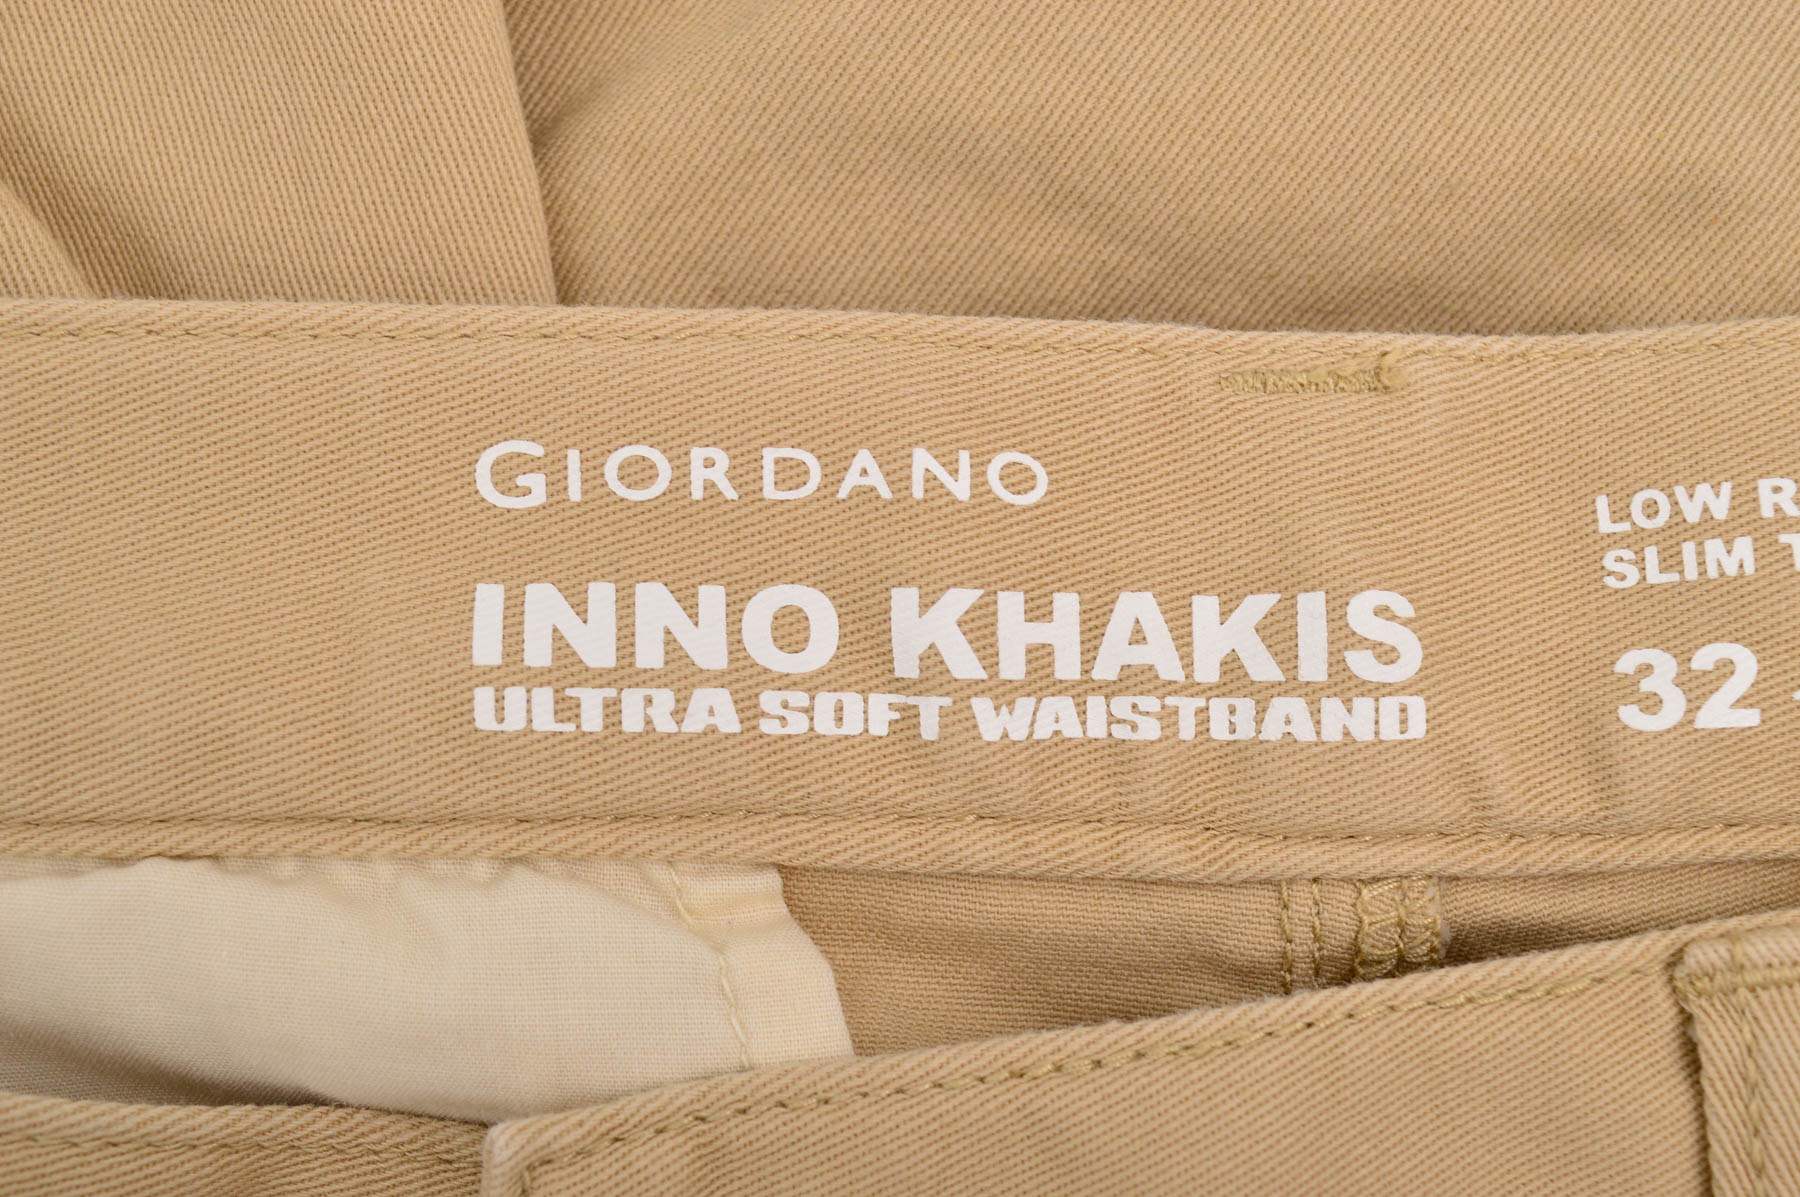 Pantalon pentru bărbați - Giordano - 2